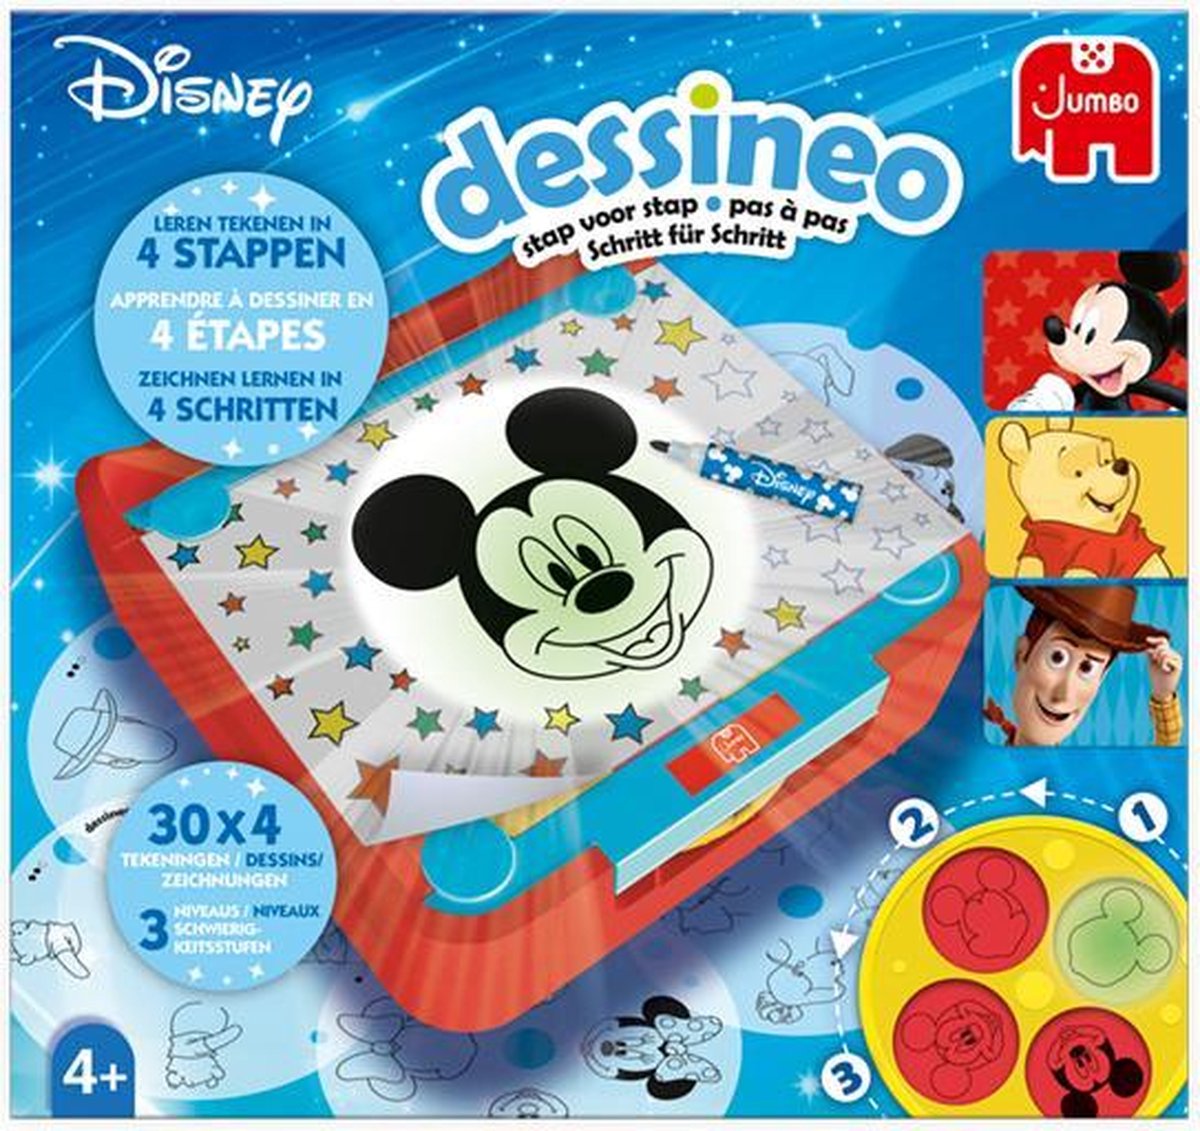 Dessineo Learn to Draw - Disney